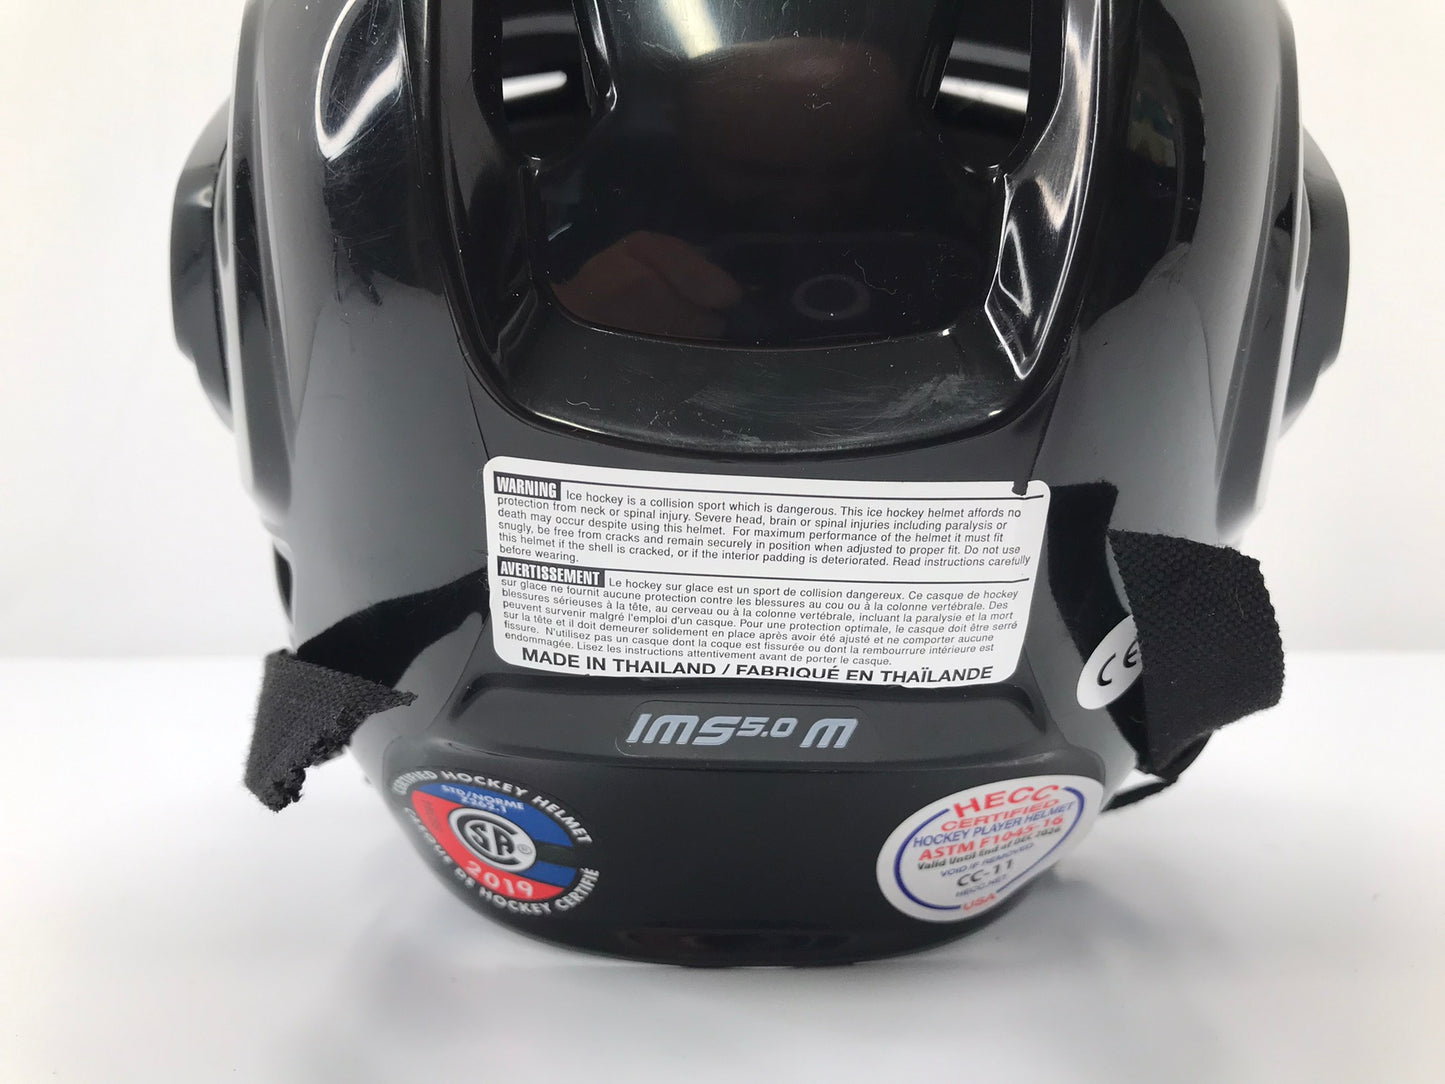 Hockey Helmet Child Size Medium Bauer Expires Dec 2026 New Demo Model